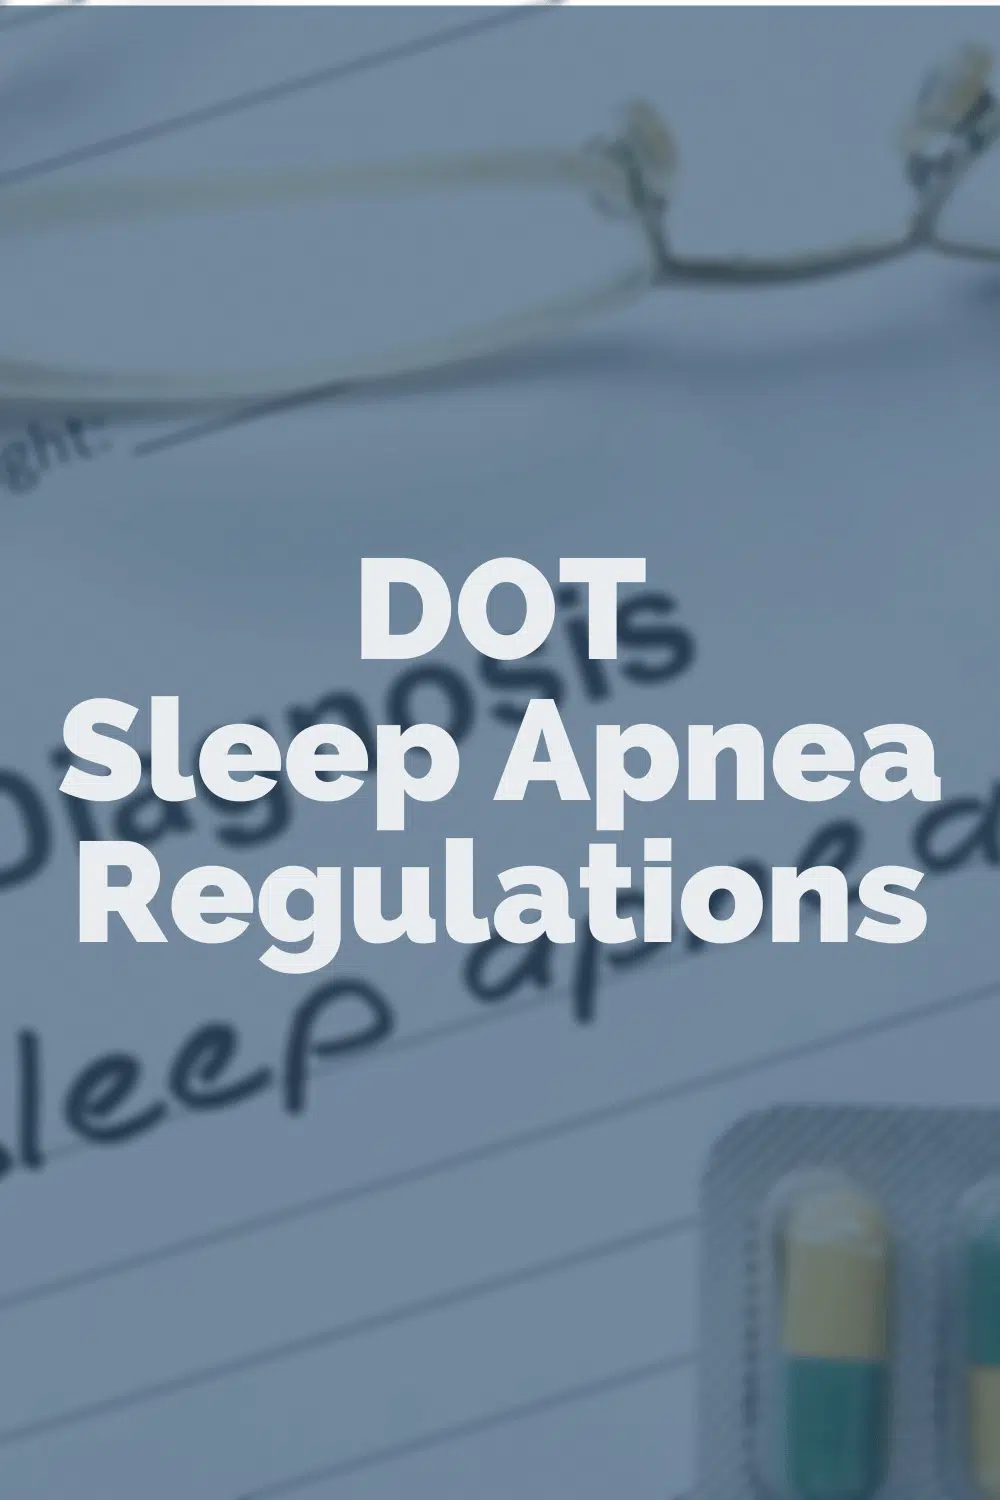 DOT Sleep Apnea Regulations